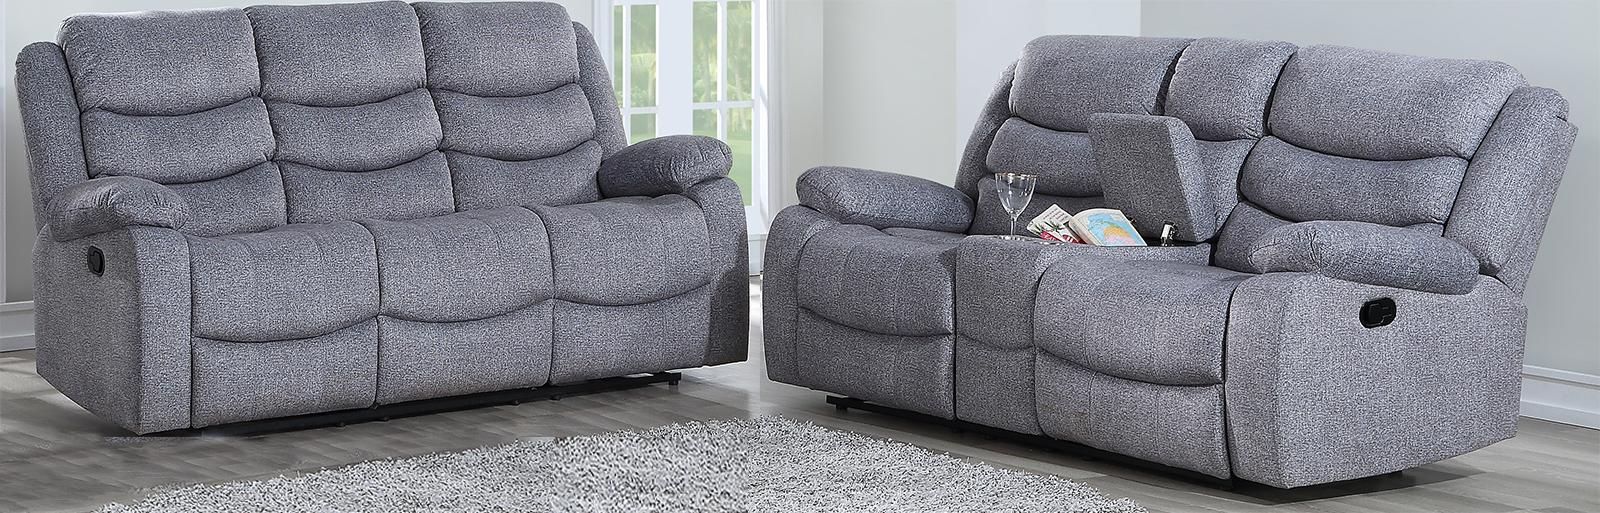 New Classic Furniture Granada Dual Recliner Sofa in Gray